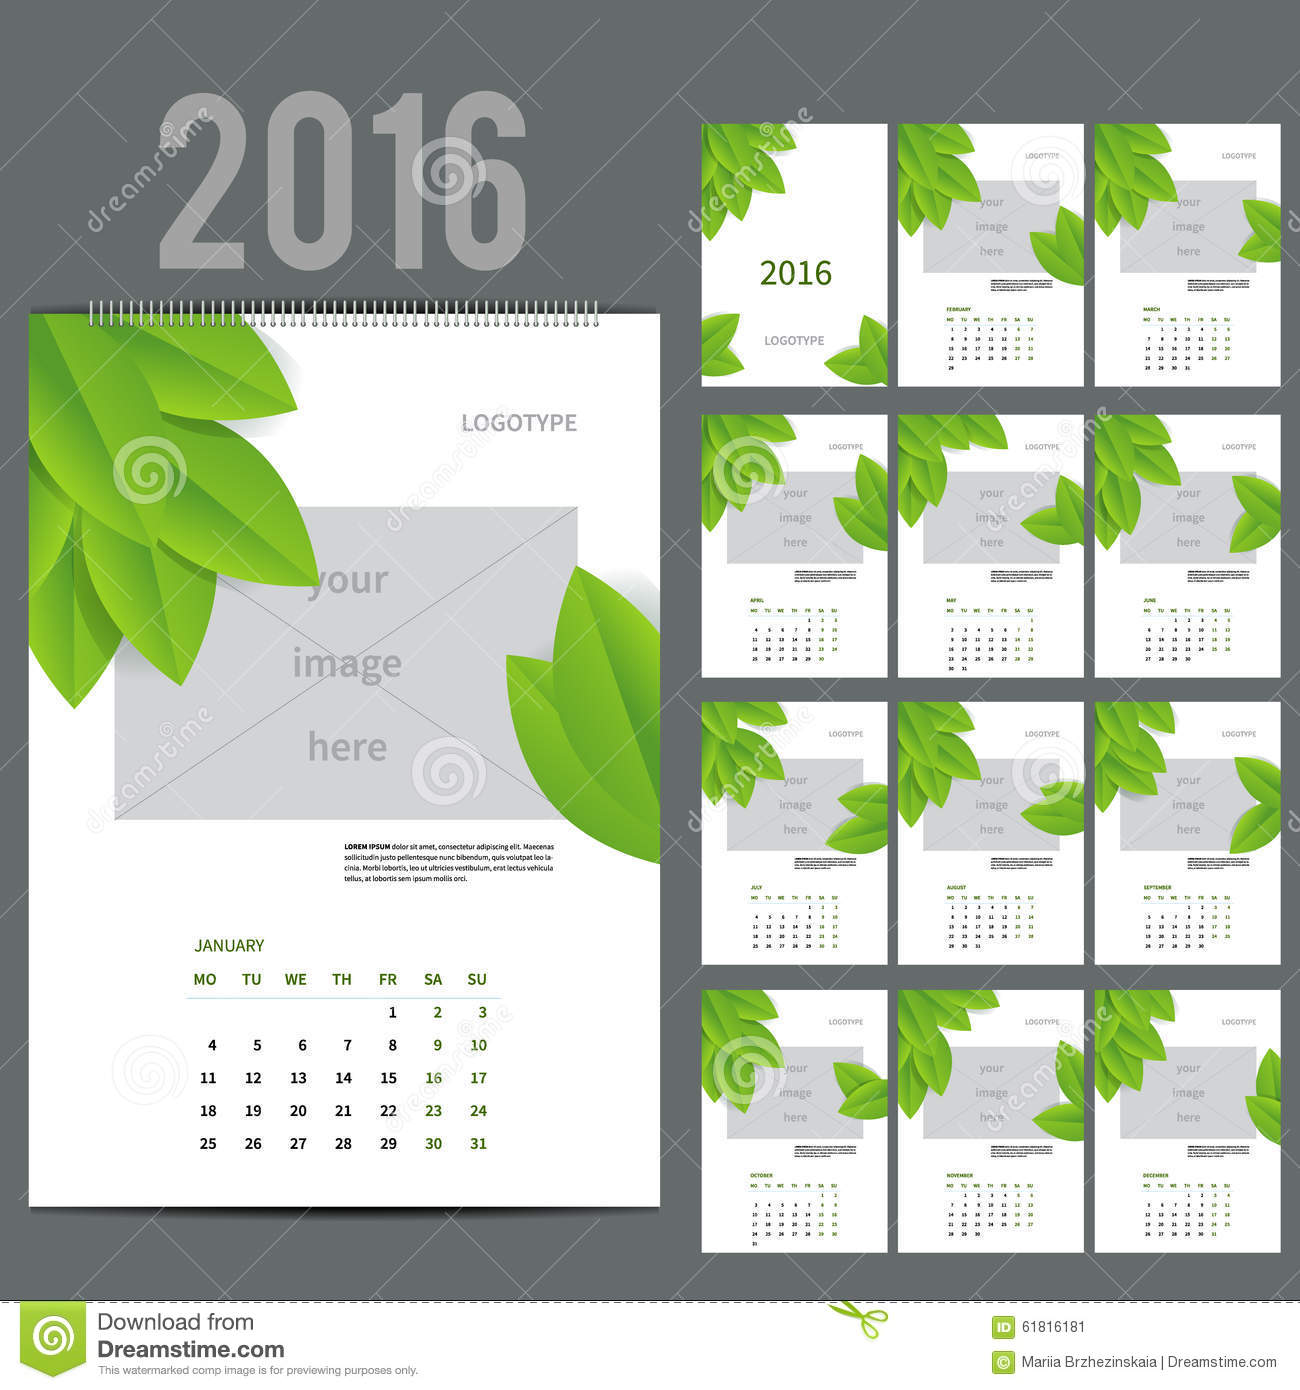 2016 Monthly Calendar Vector